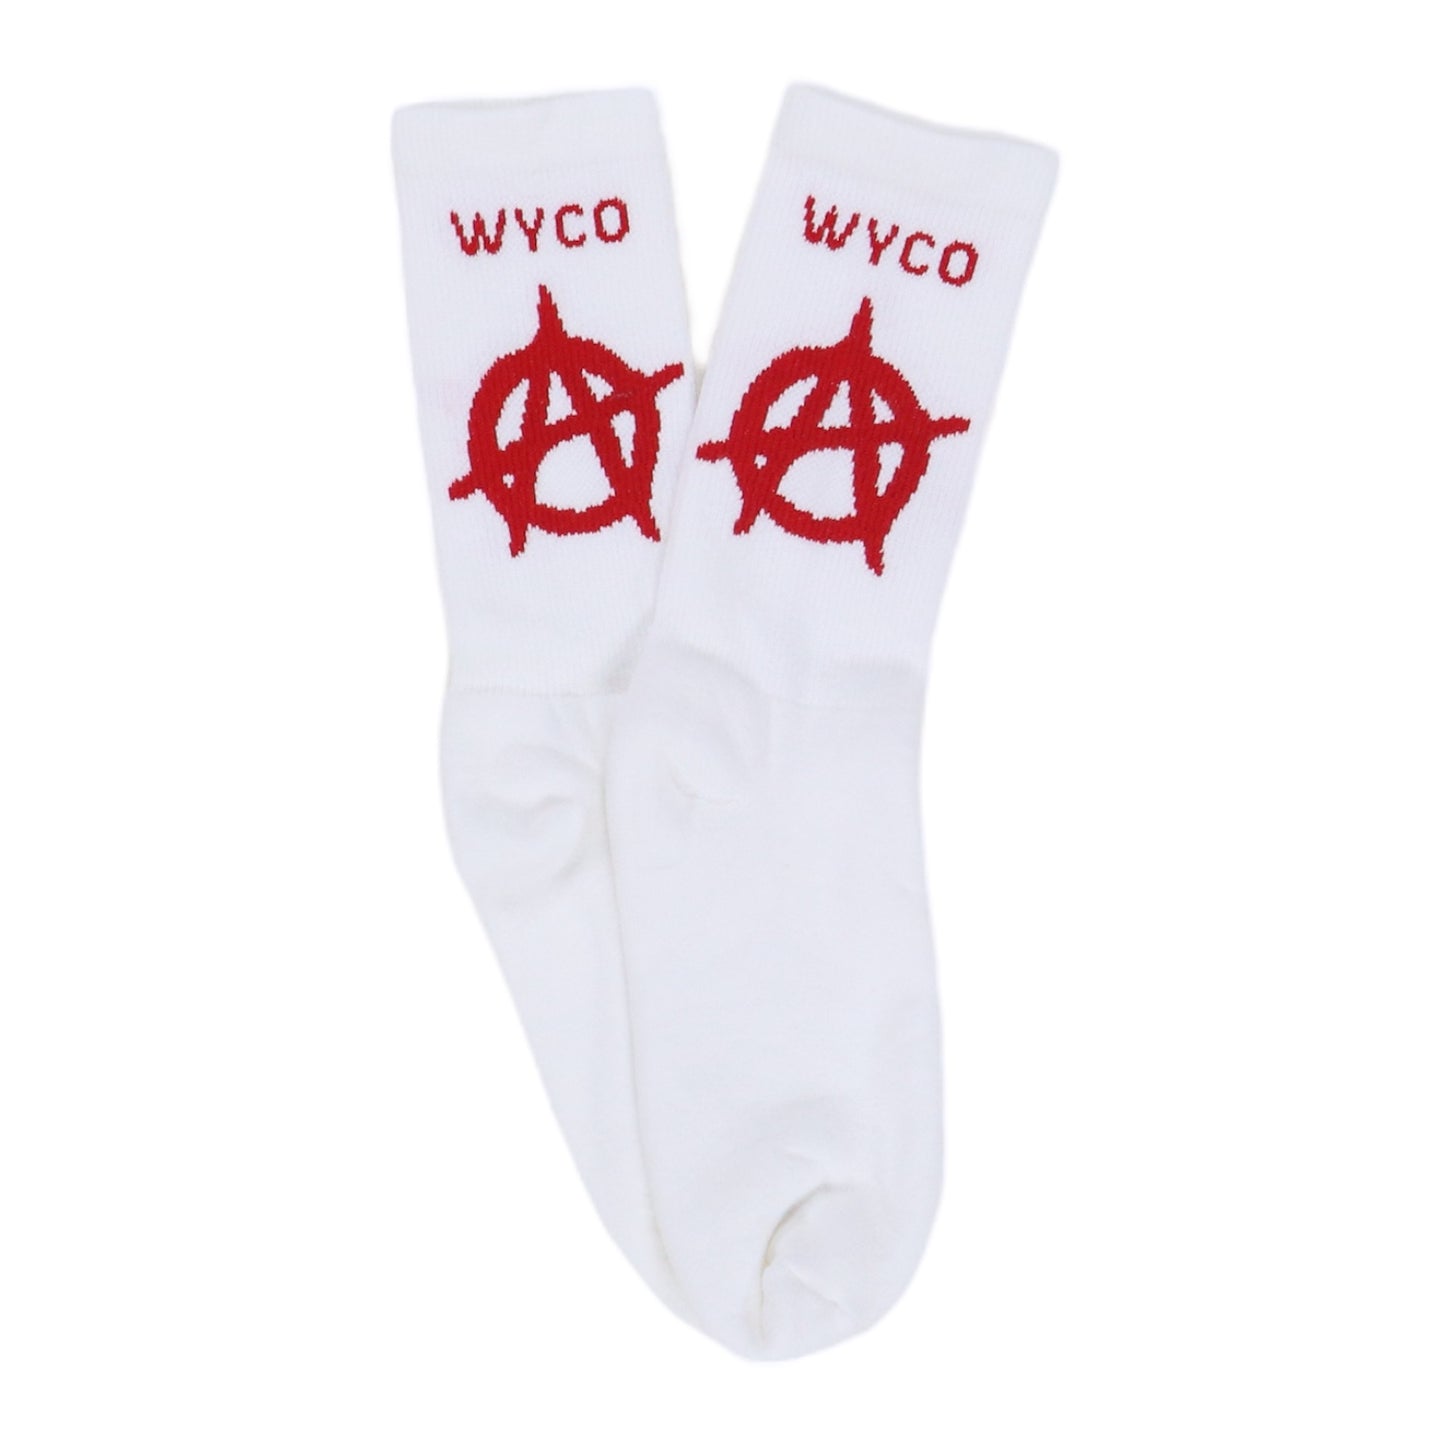 WyCo Vintage Red Anarchy Socks